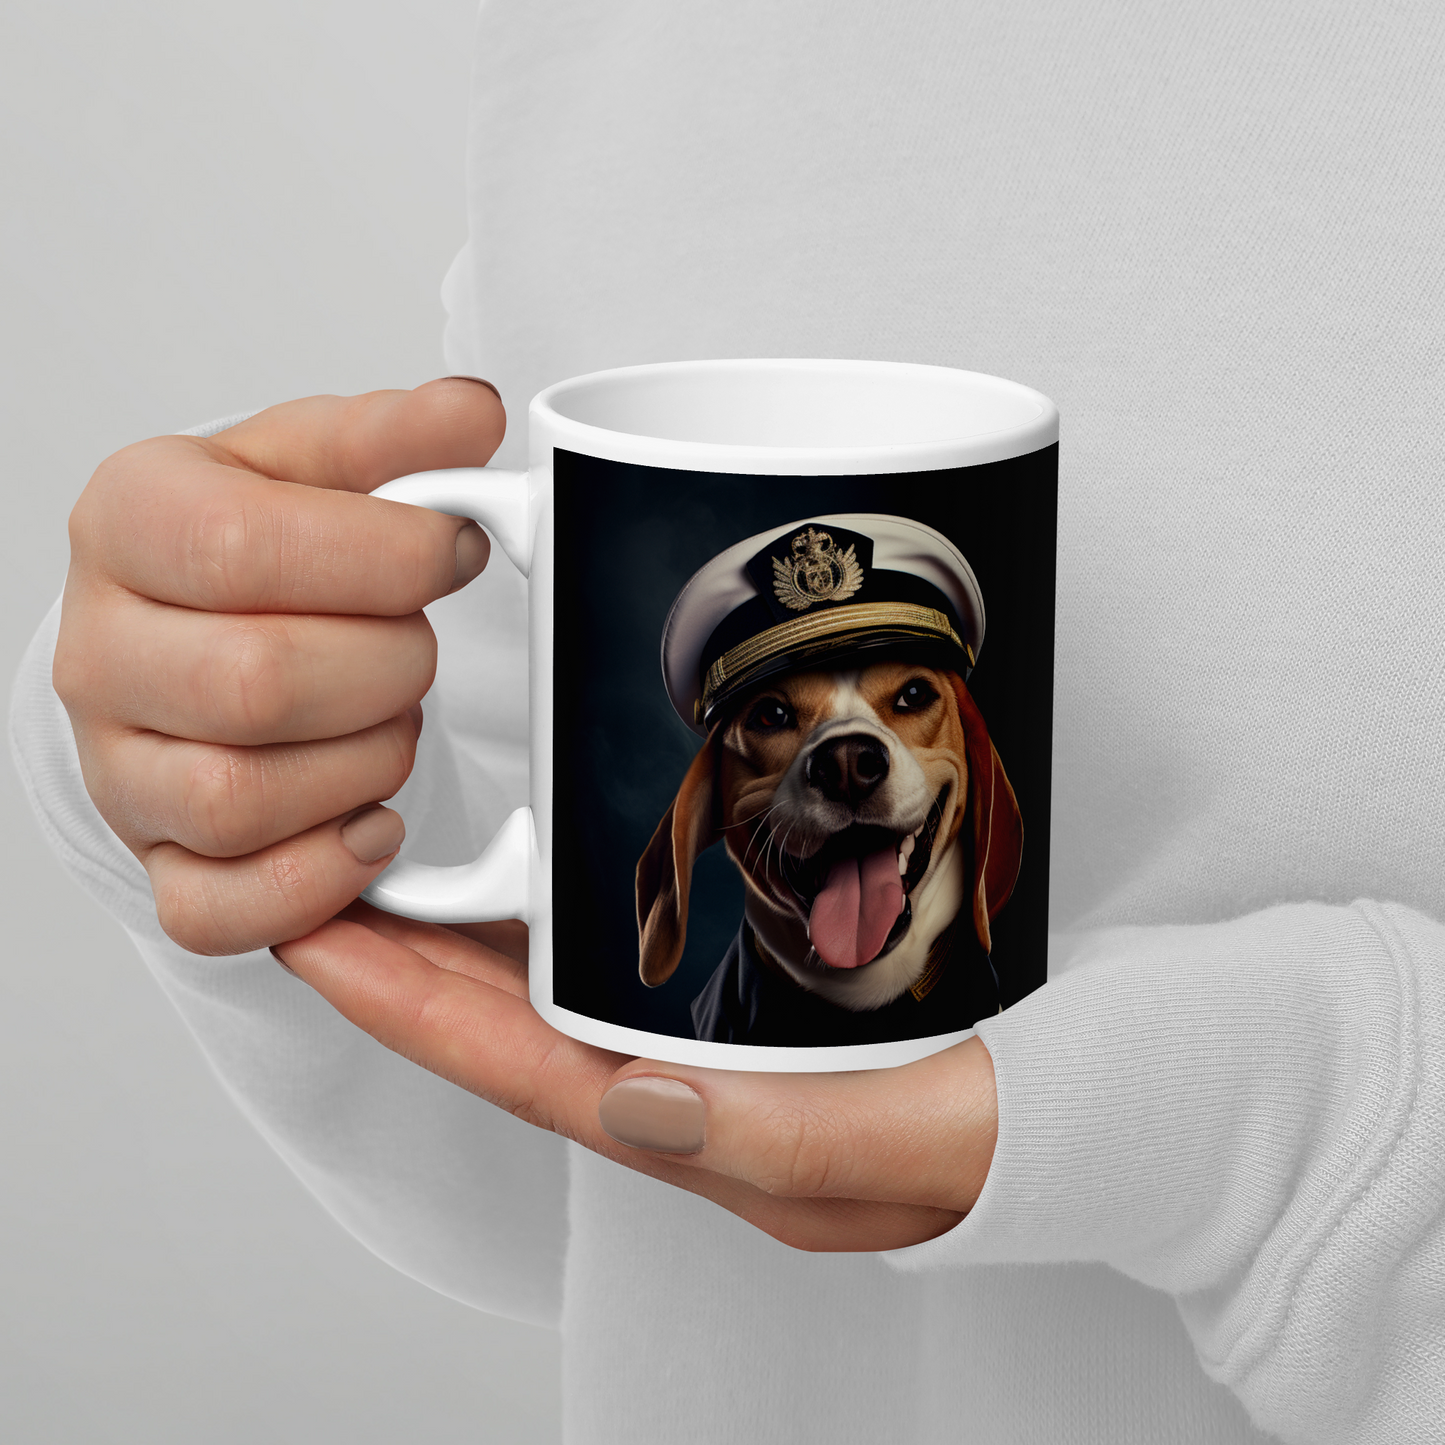 Beagle Airline Pilot White glossy mug